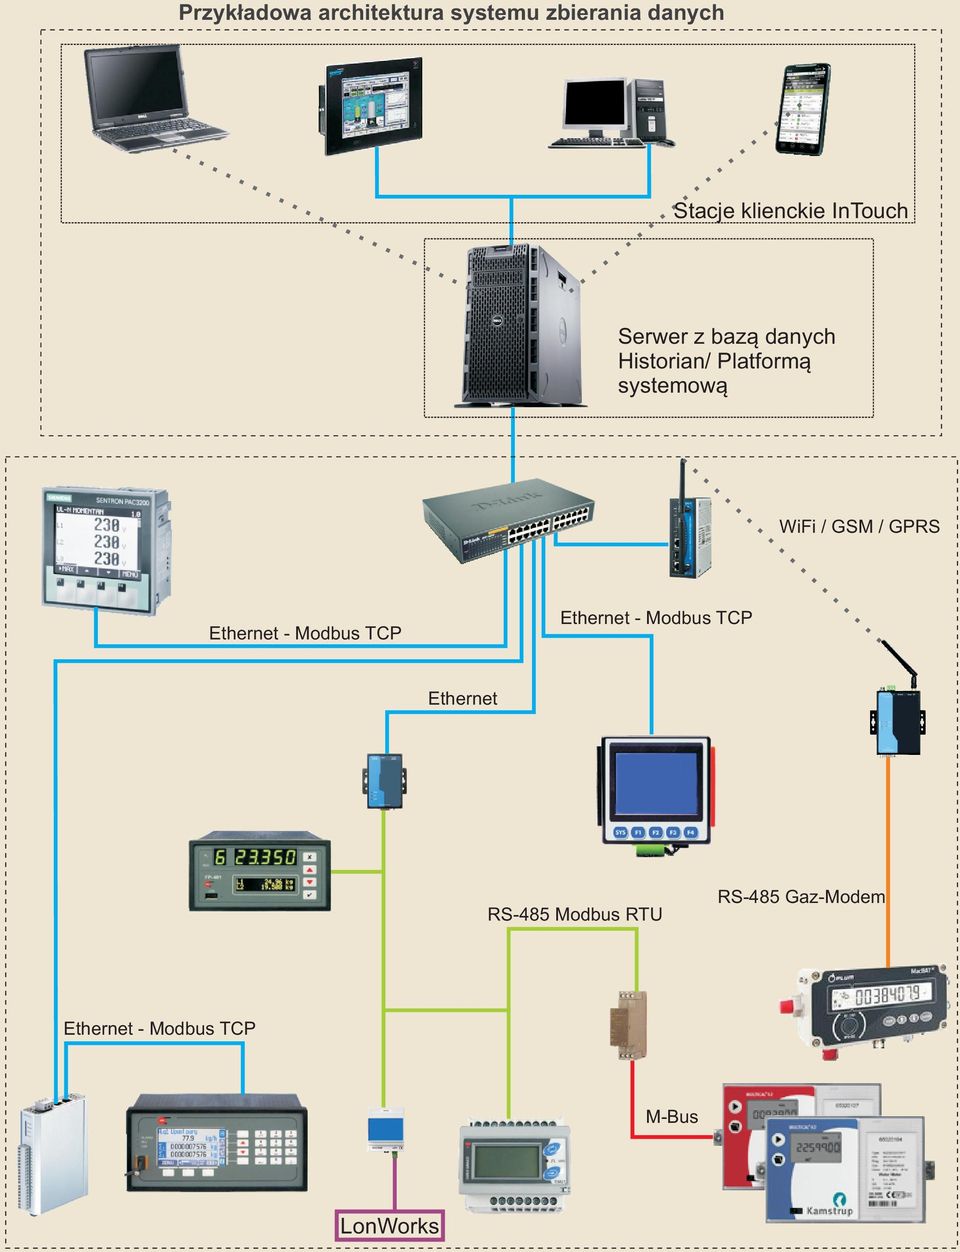 GSM / GPRS Ethernet - Modbus TCP Ethernet - Modbus TCP Ethernet